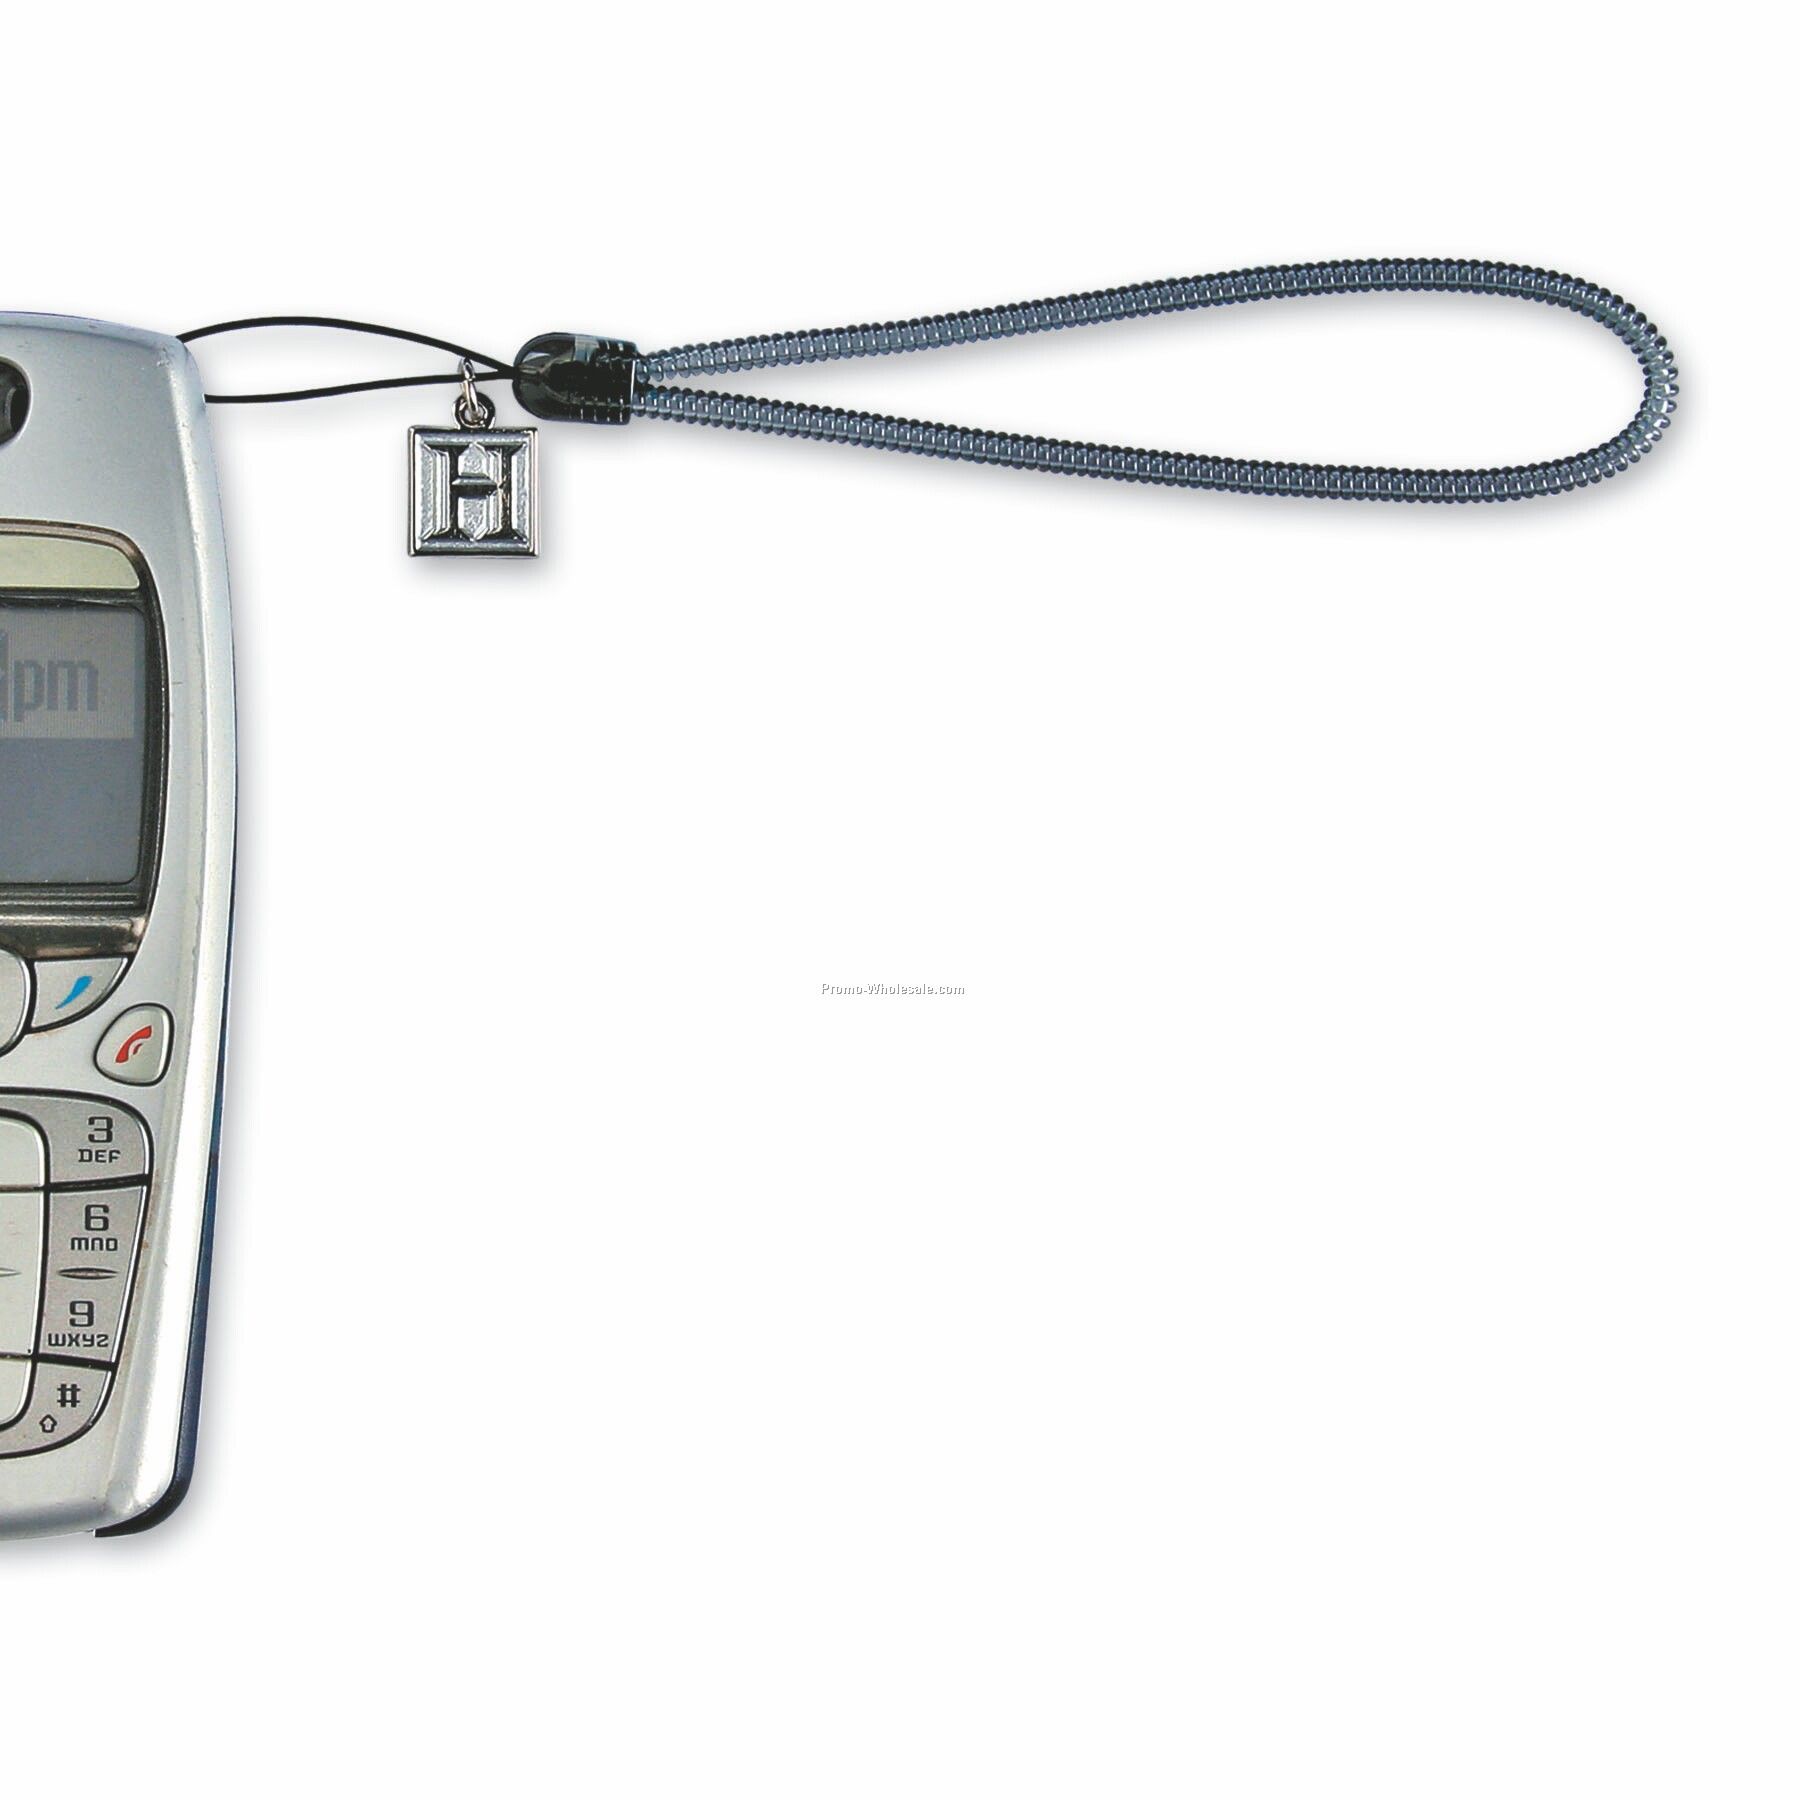 Cnij Cellphone Charm (1-1/4")